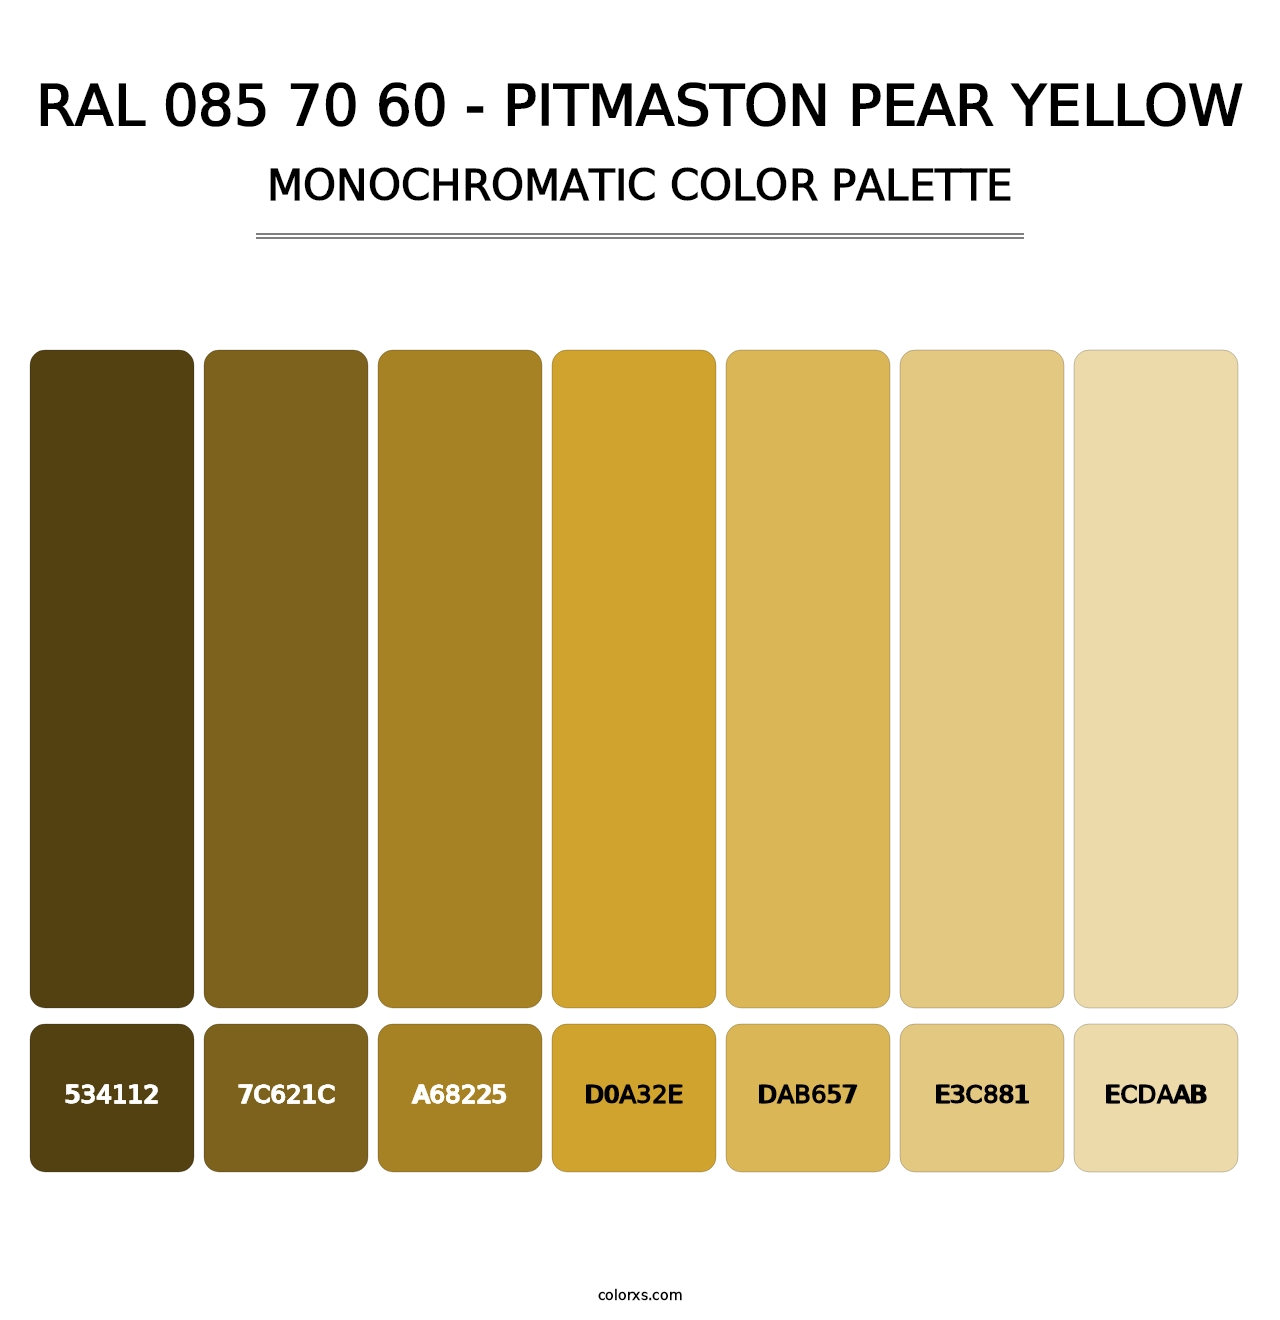 RAL 085 70 60 - Pitmaston Pear Yellow - Monochromatic Color Palette